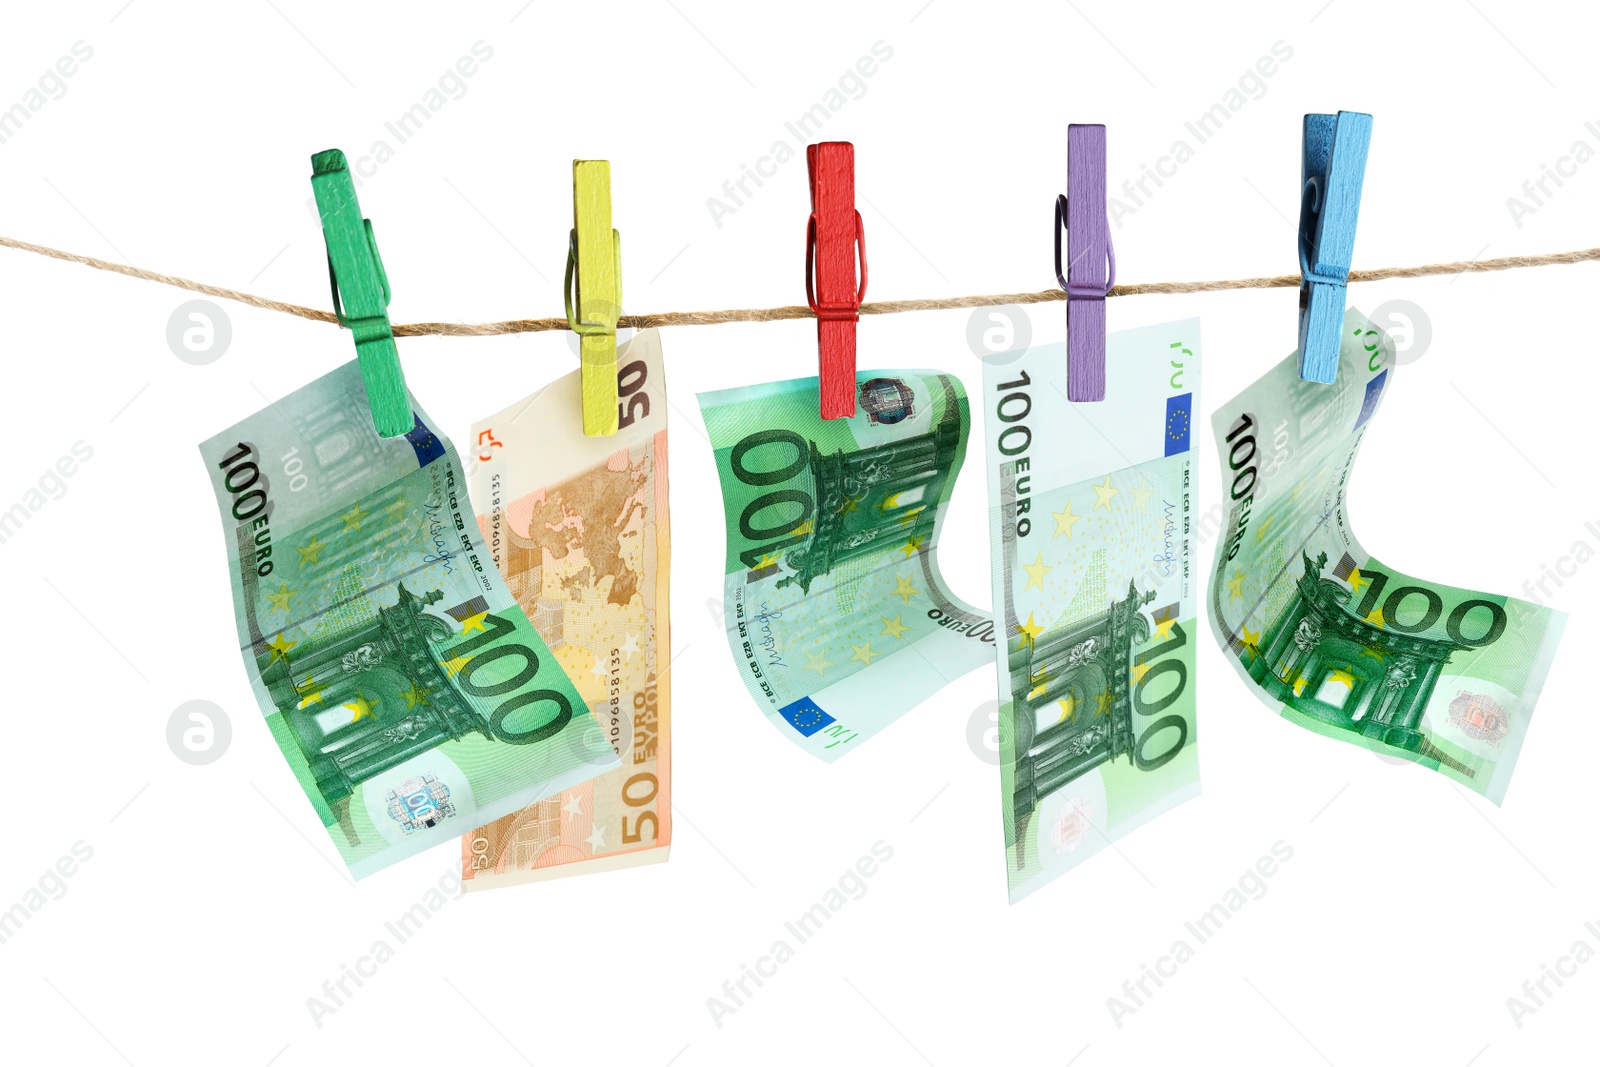 Image of Money laundering. Euro banknotes hanging on clothesline against white background